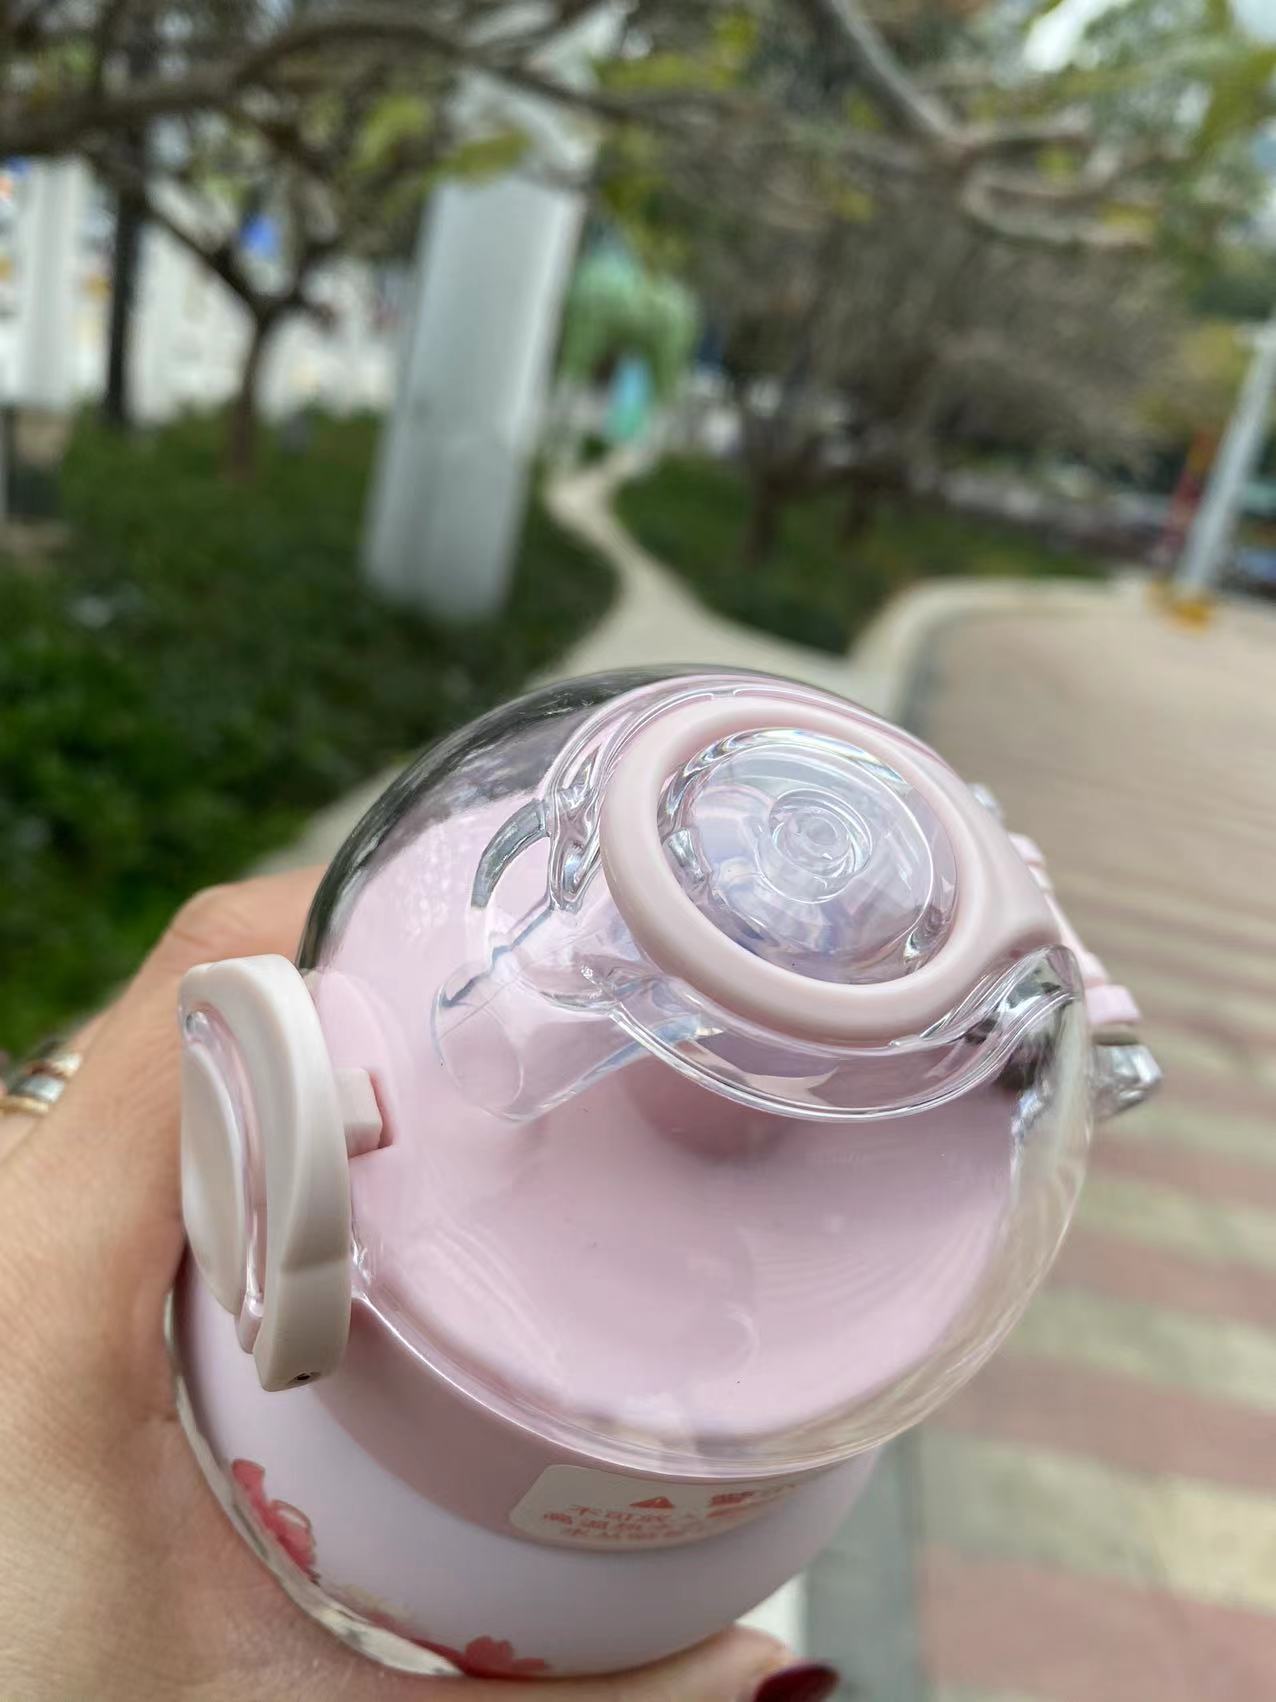 Starbucks Japan Foldable Silicone Bottle (Pink)